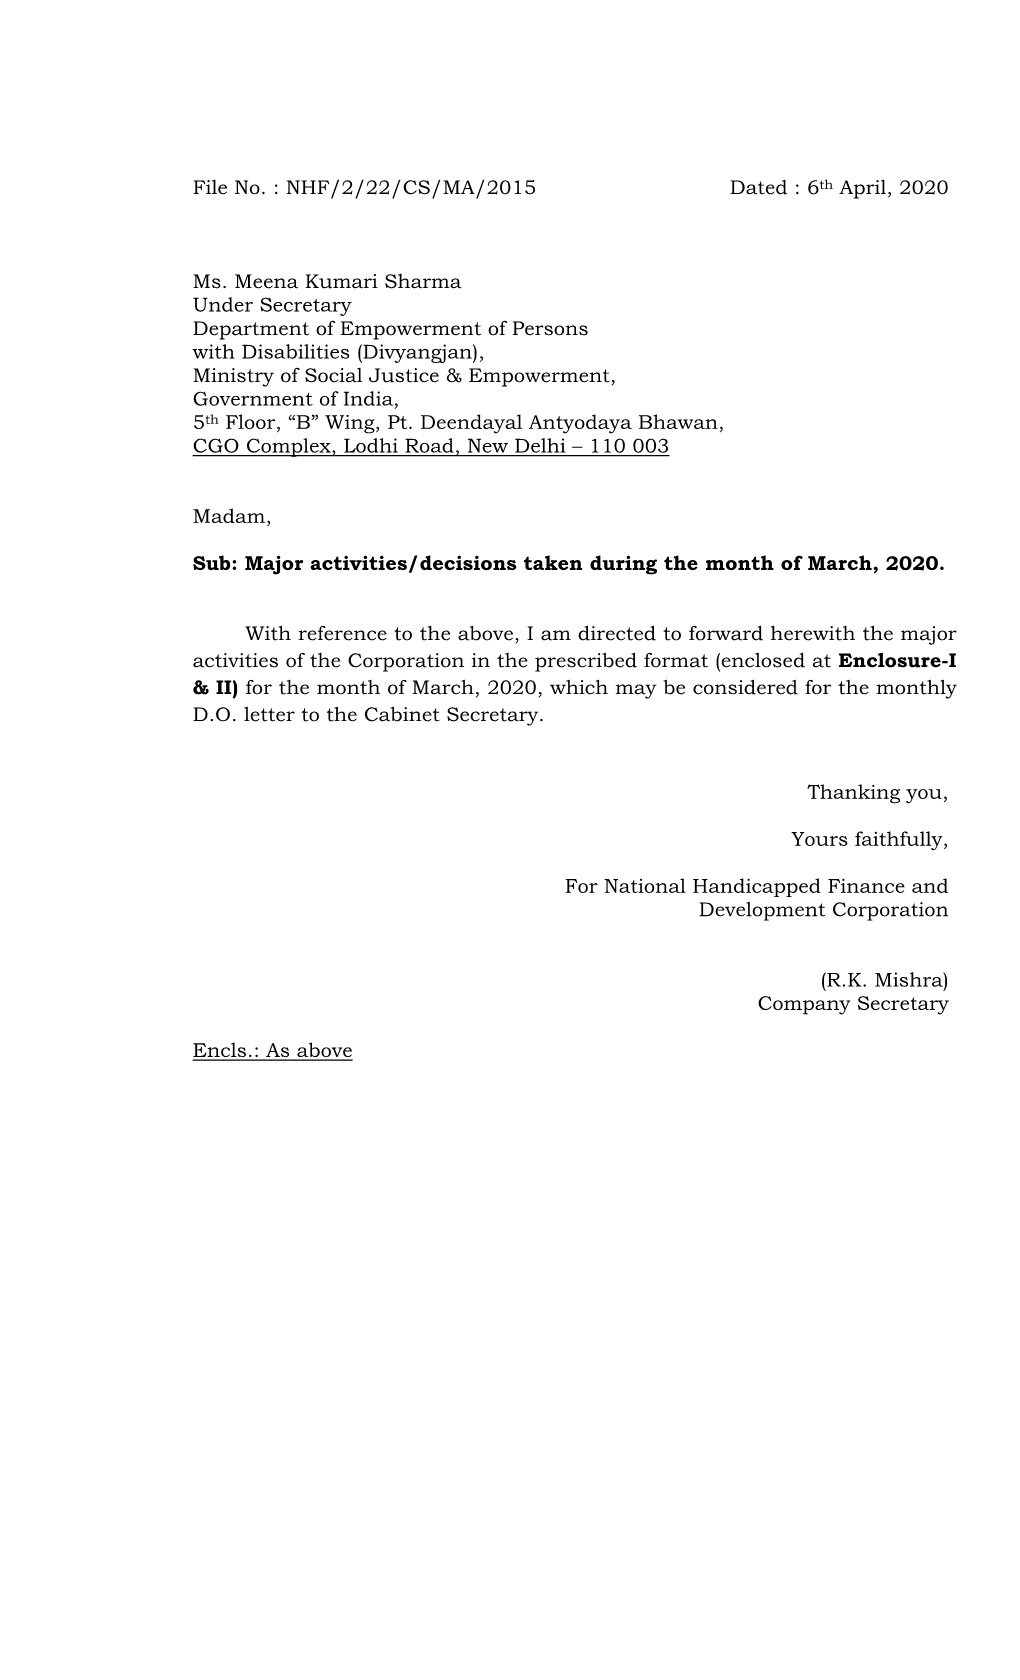 6Th April, 2020 Ms. Meena Kumari Sharma Under Secretary Department of Empowerment Of